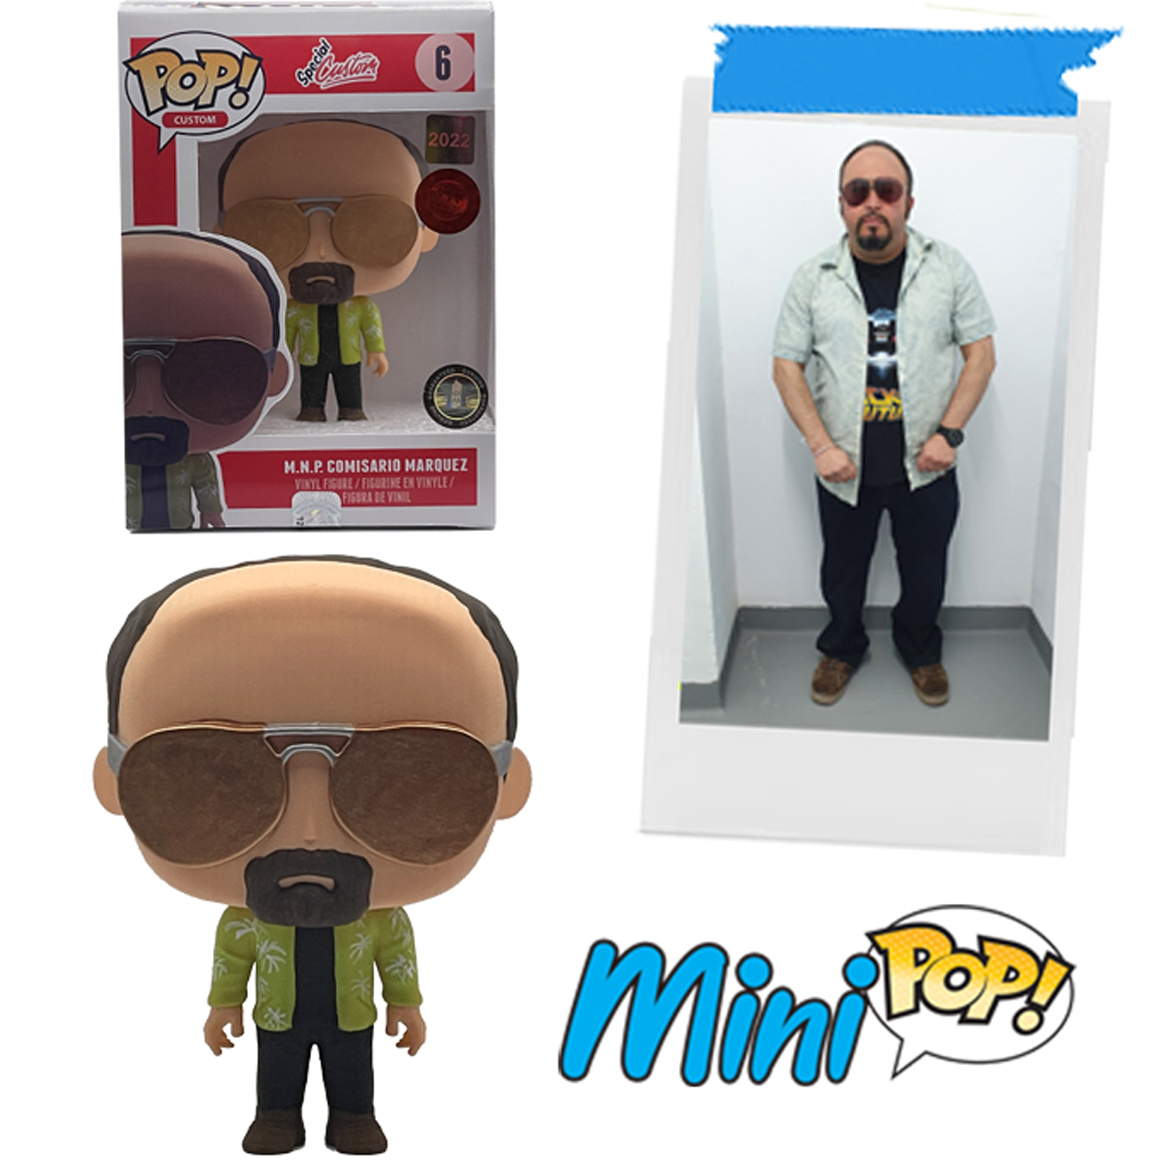 Mini-pop - Creador de figuras POP personalizado a partir de tus fotos